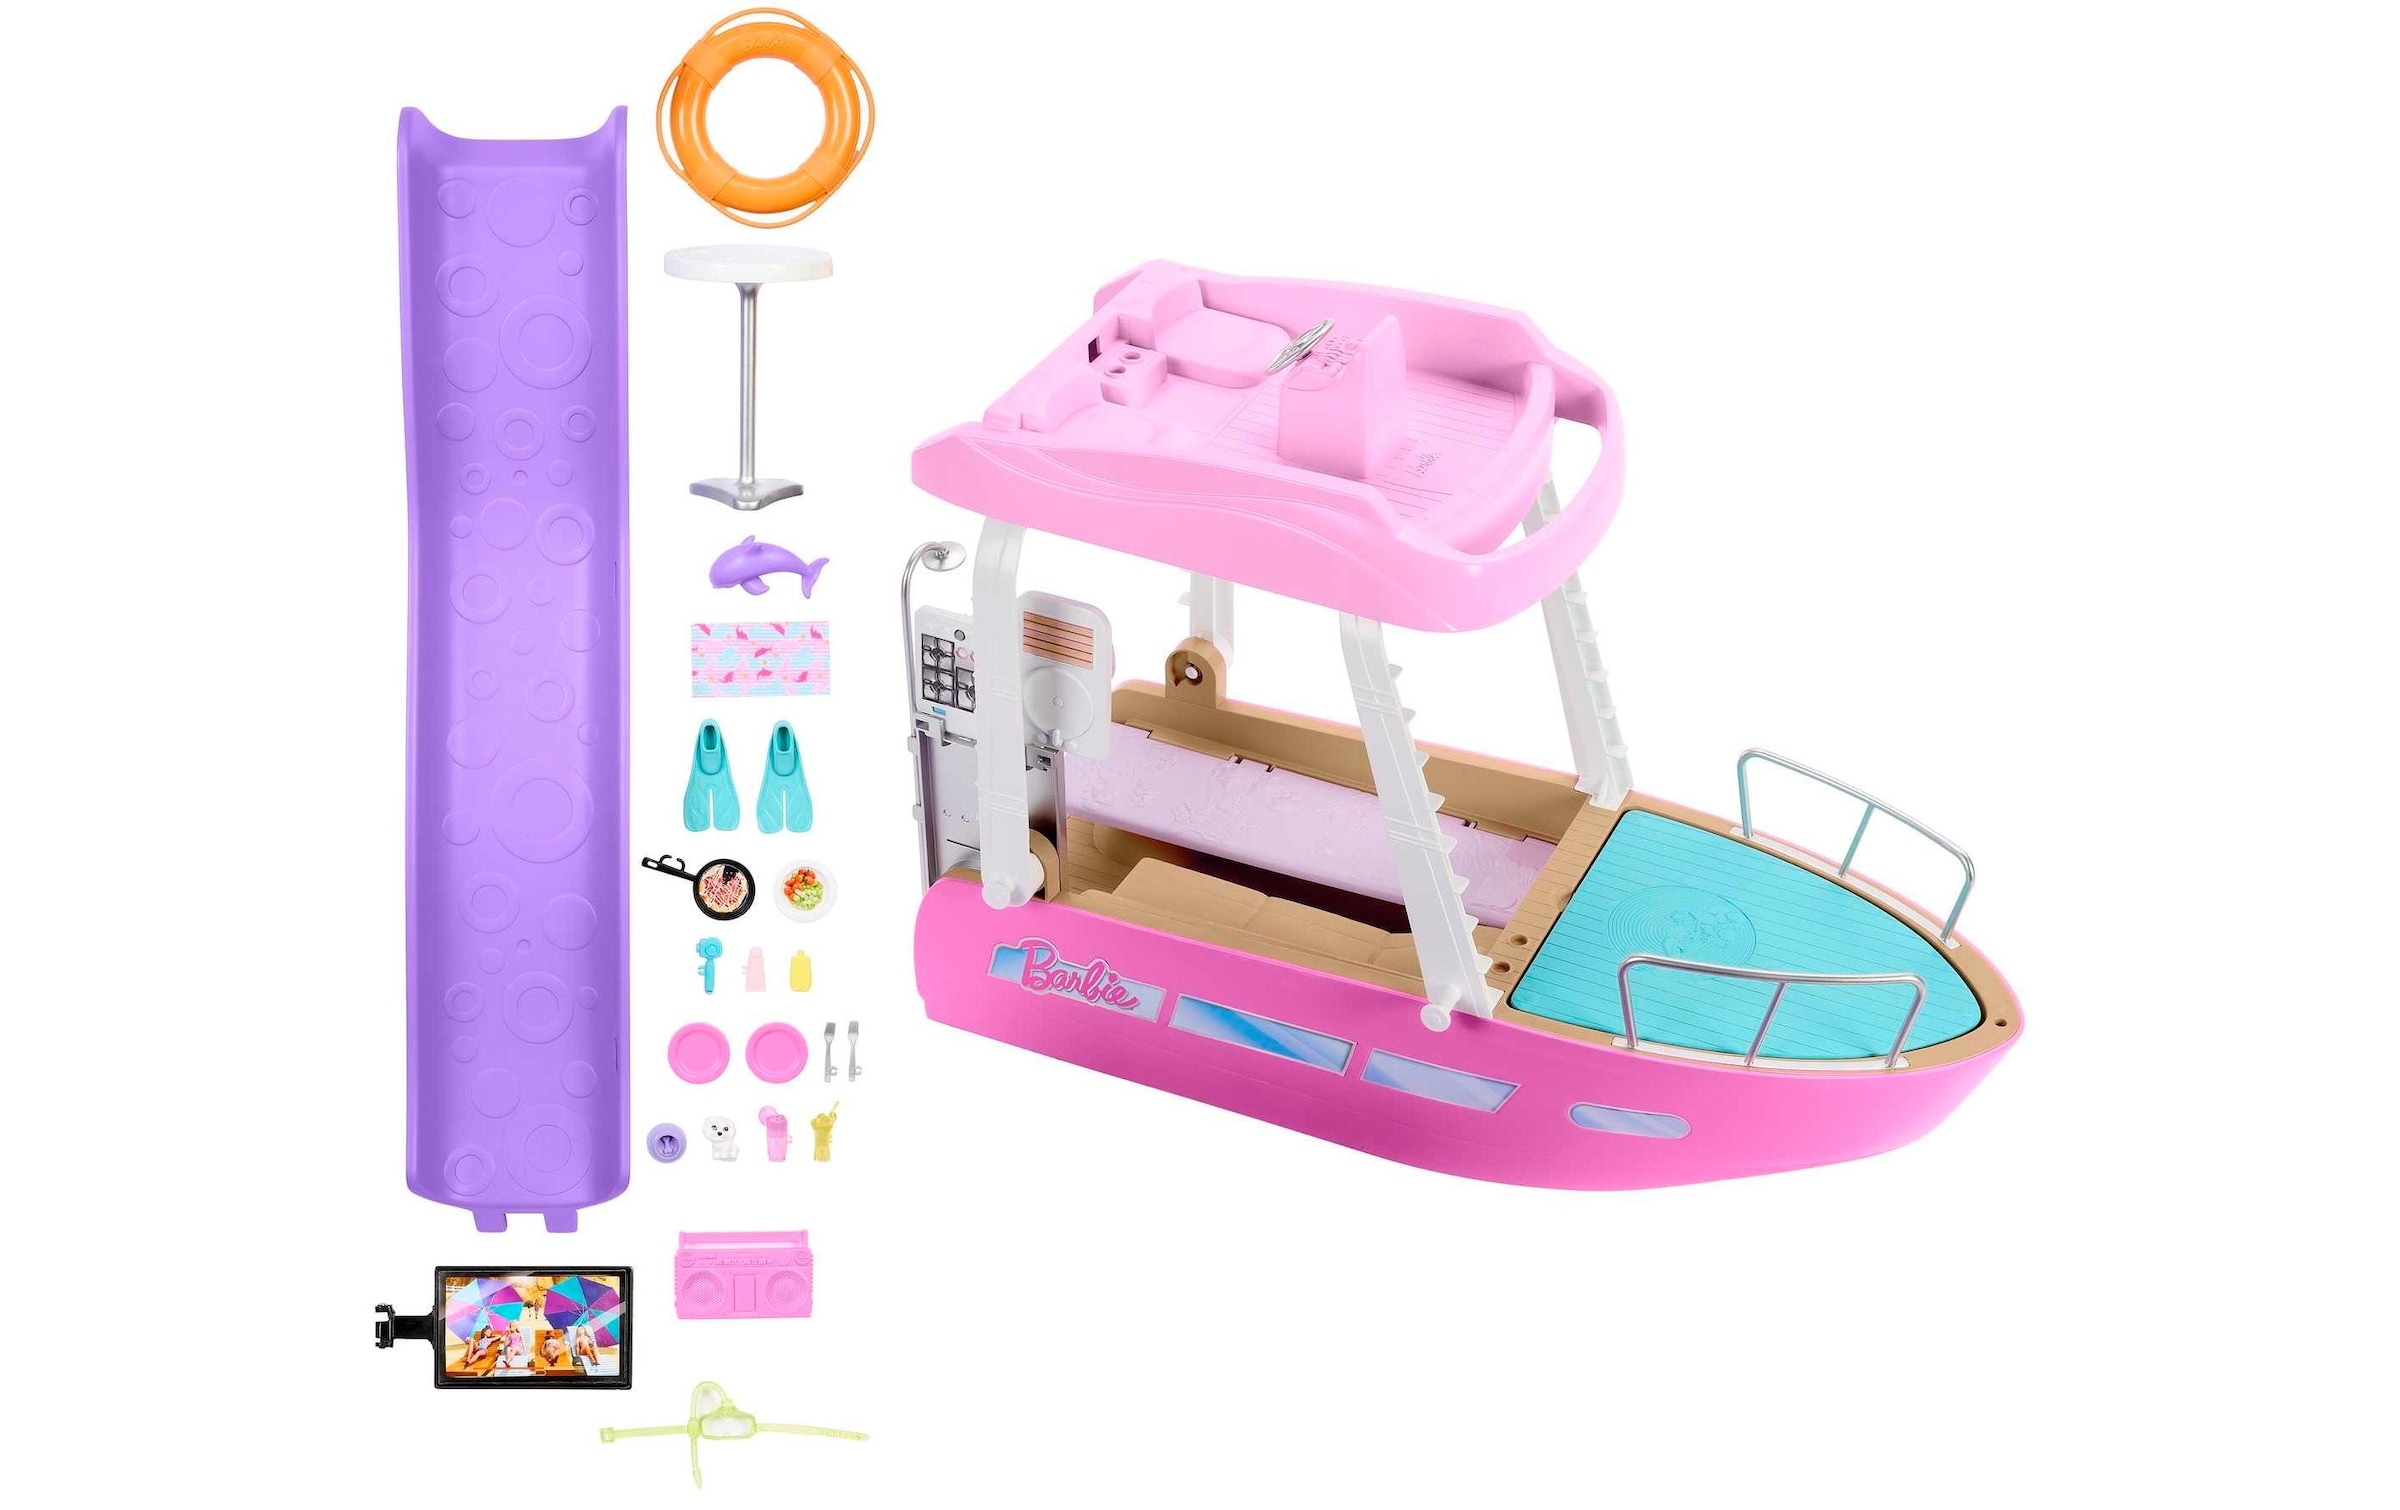 Barbie Anziehpuppe »Traumboot Spielset«